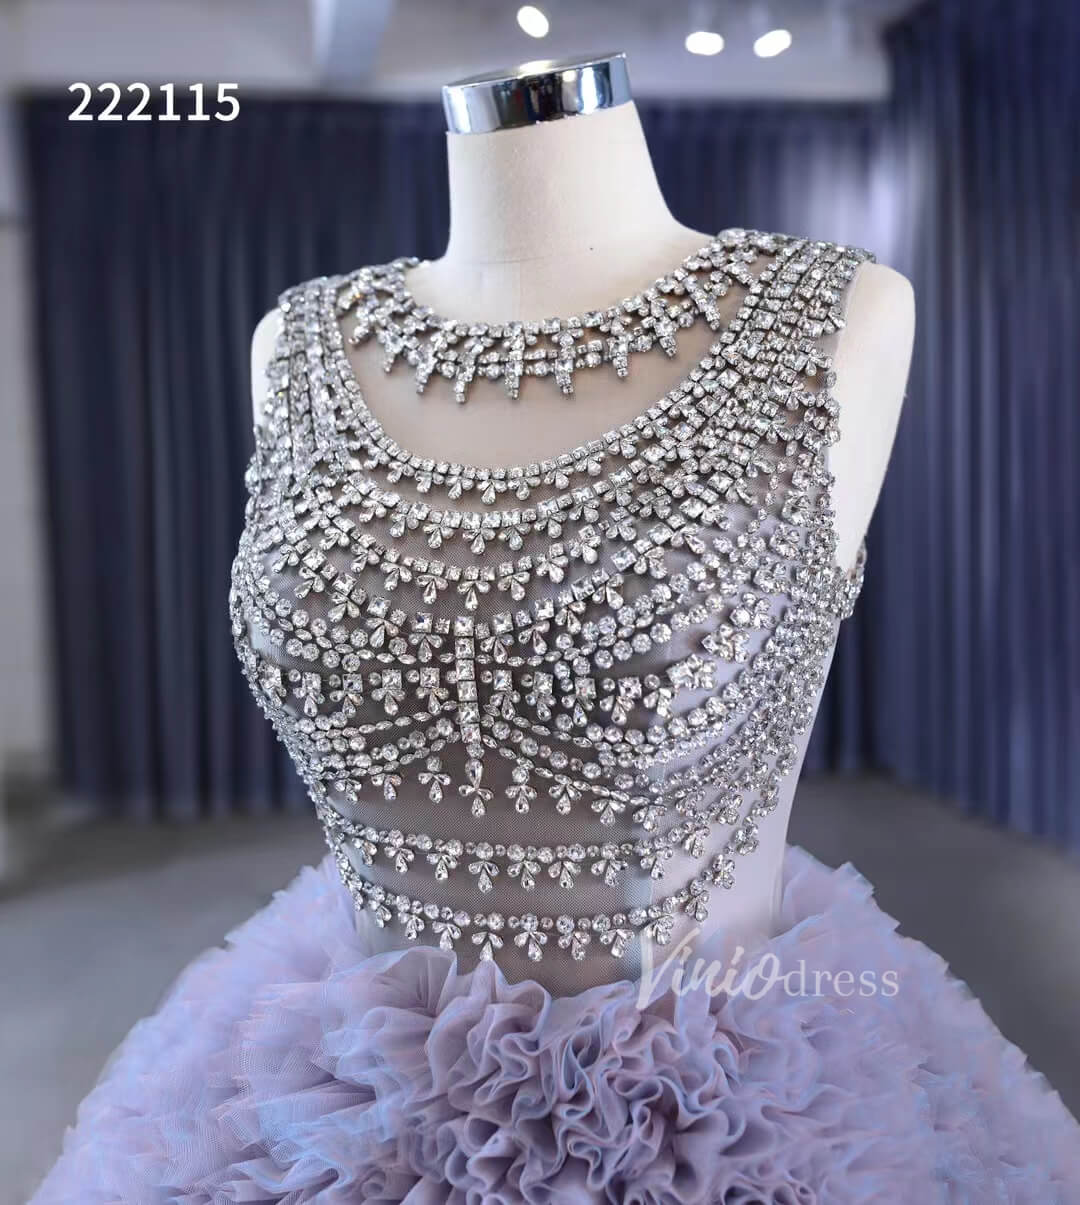 Lavender Ruffled Wedding Dress Ball Gowns with Rhinestone Bodice 222115-Quinceanera Dresses-Viniodress-Viniodress